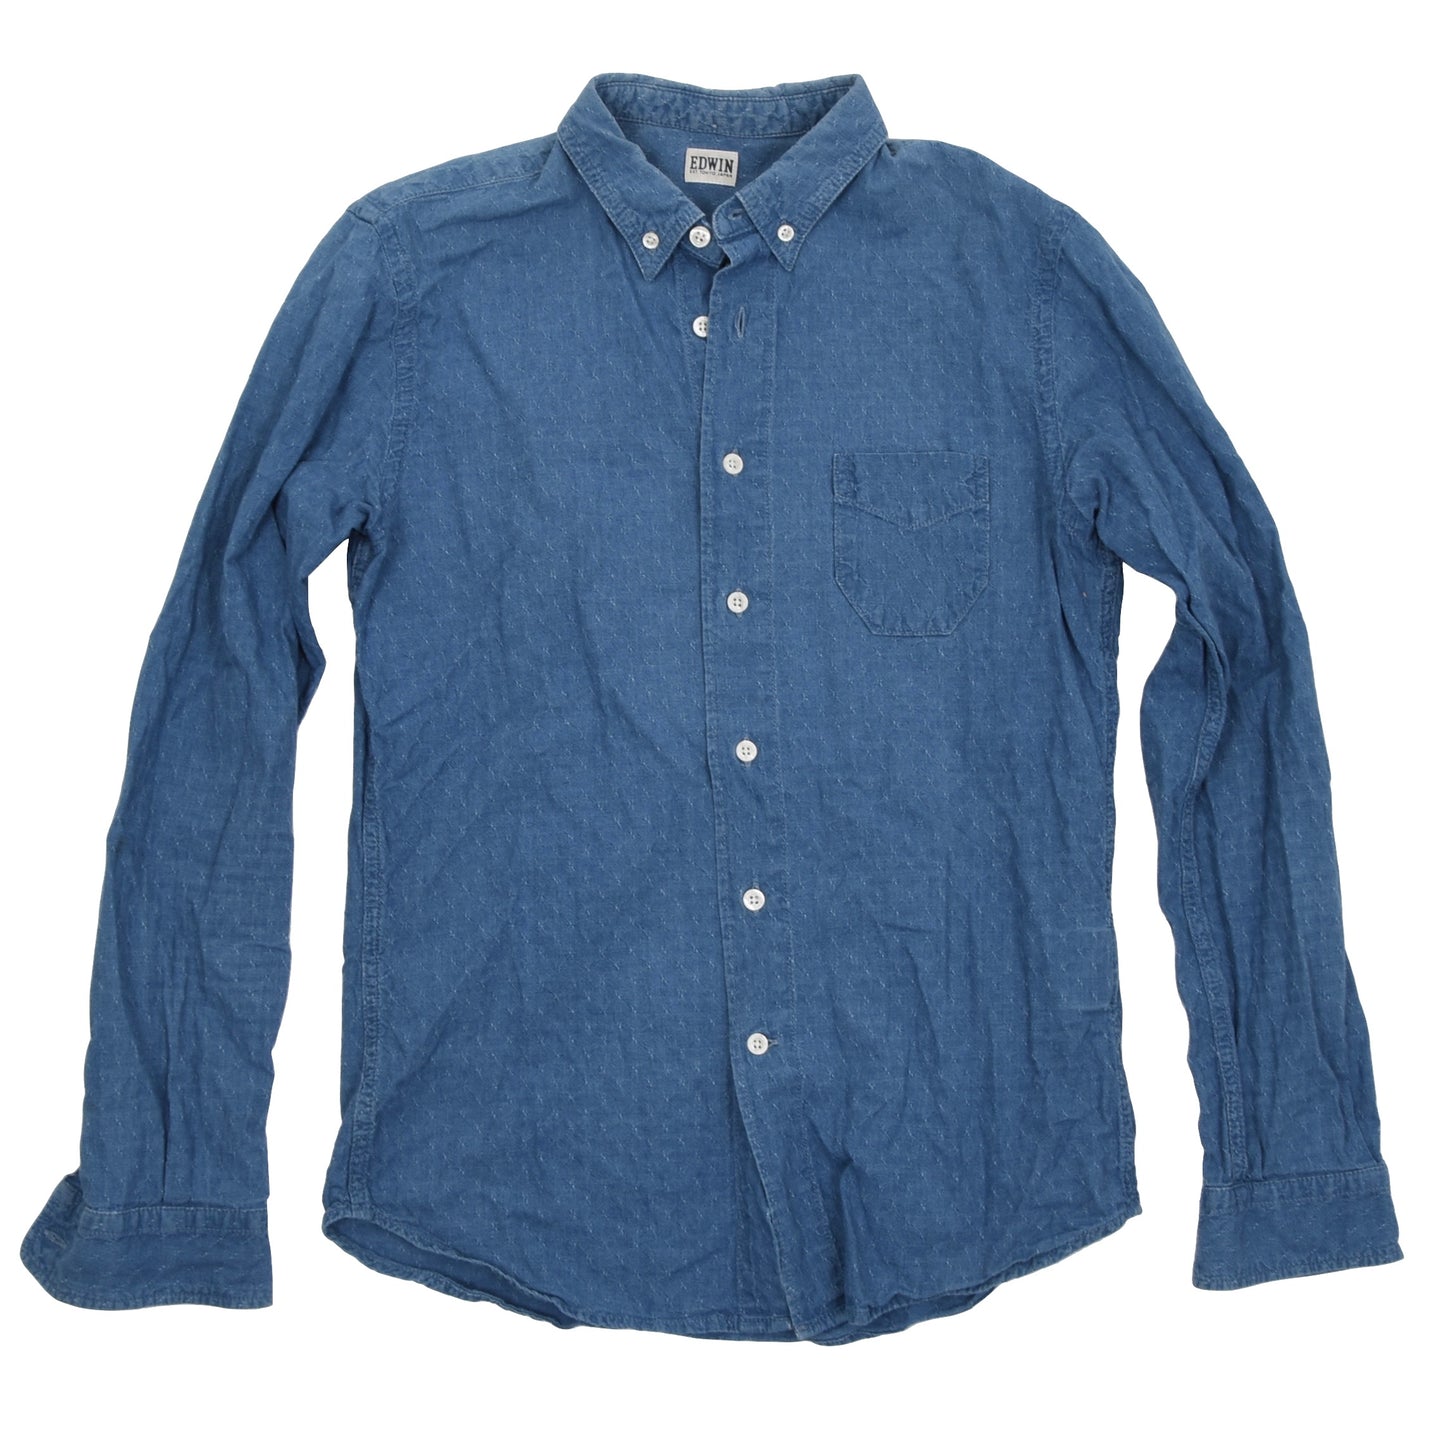 Edwin Tokyo Shirt Size S - Blue